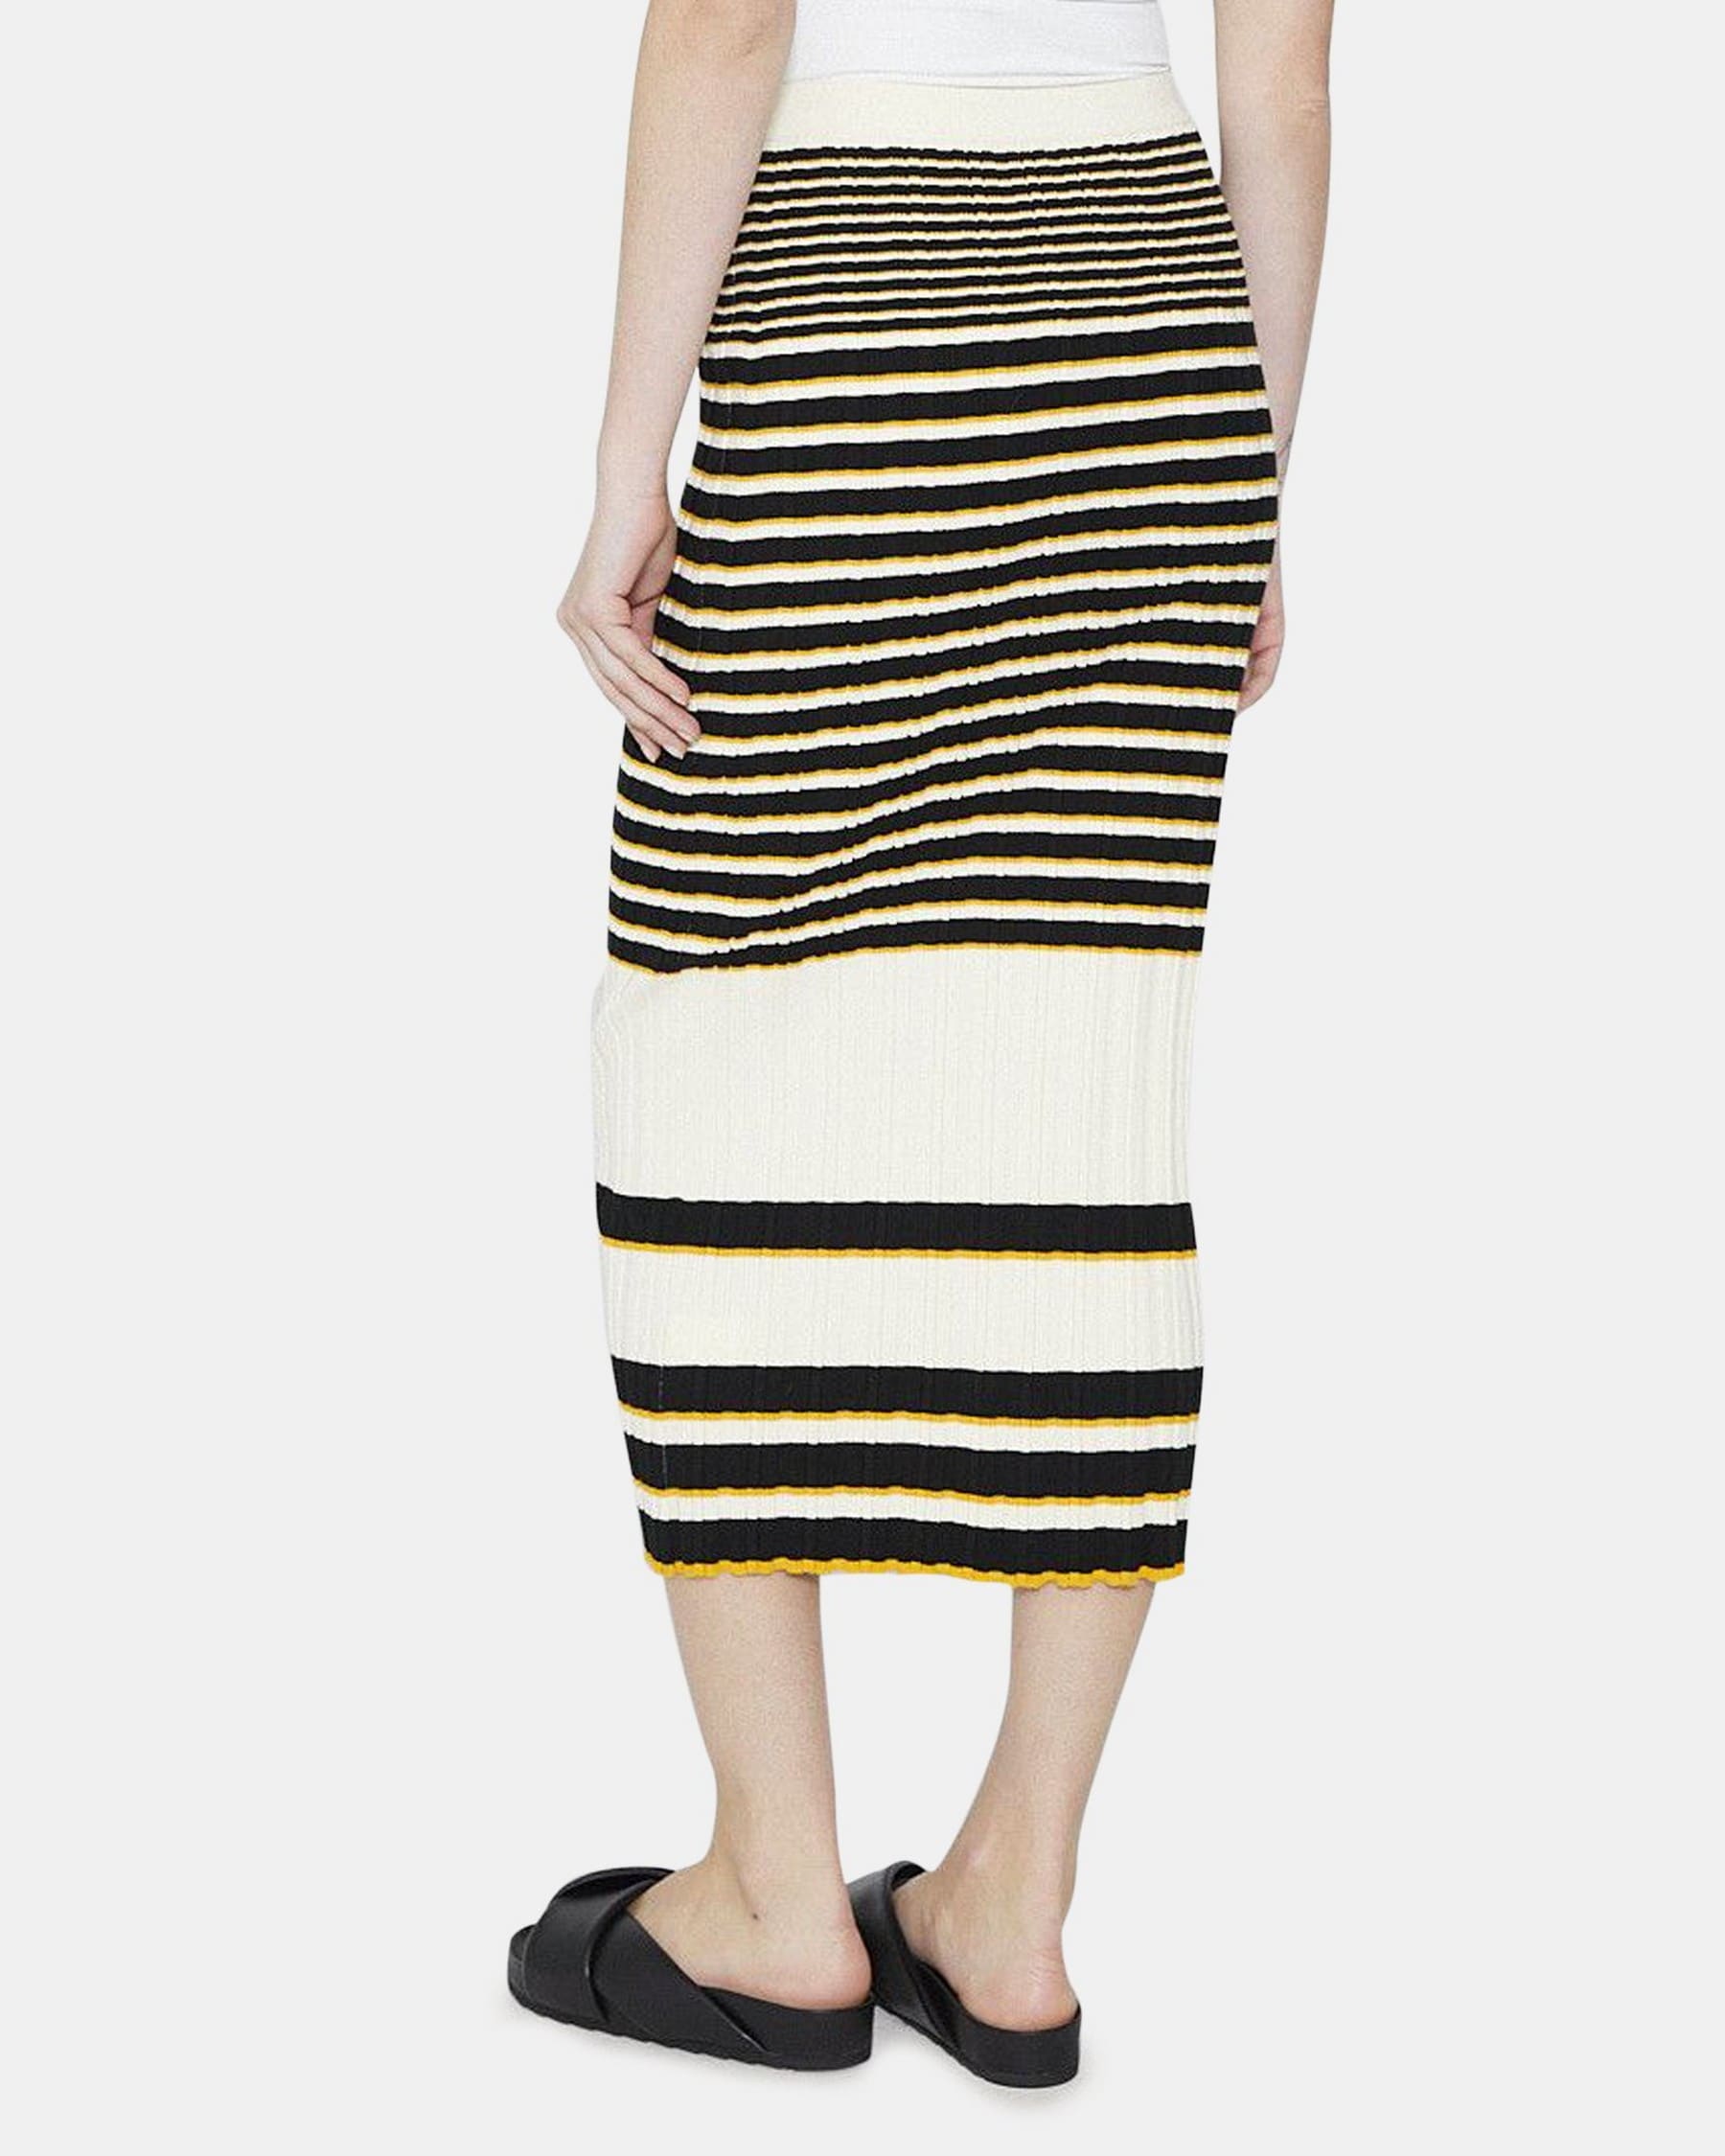 Striped Midi Skirt in Cotton Blend Rib Knit